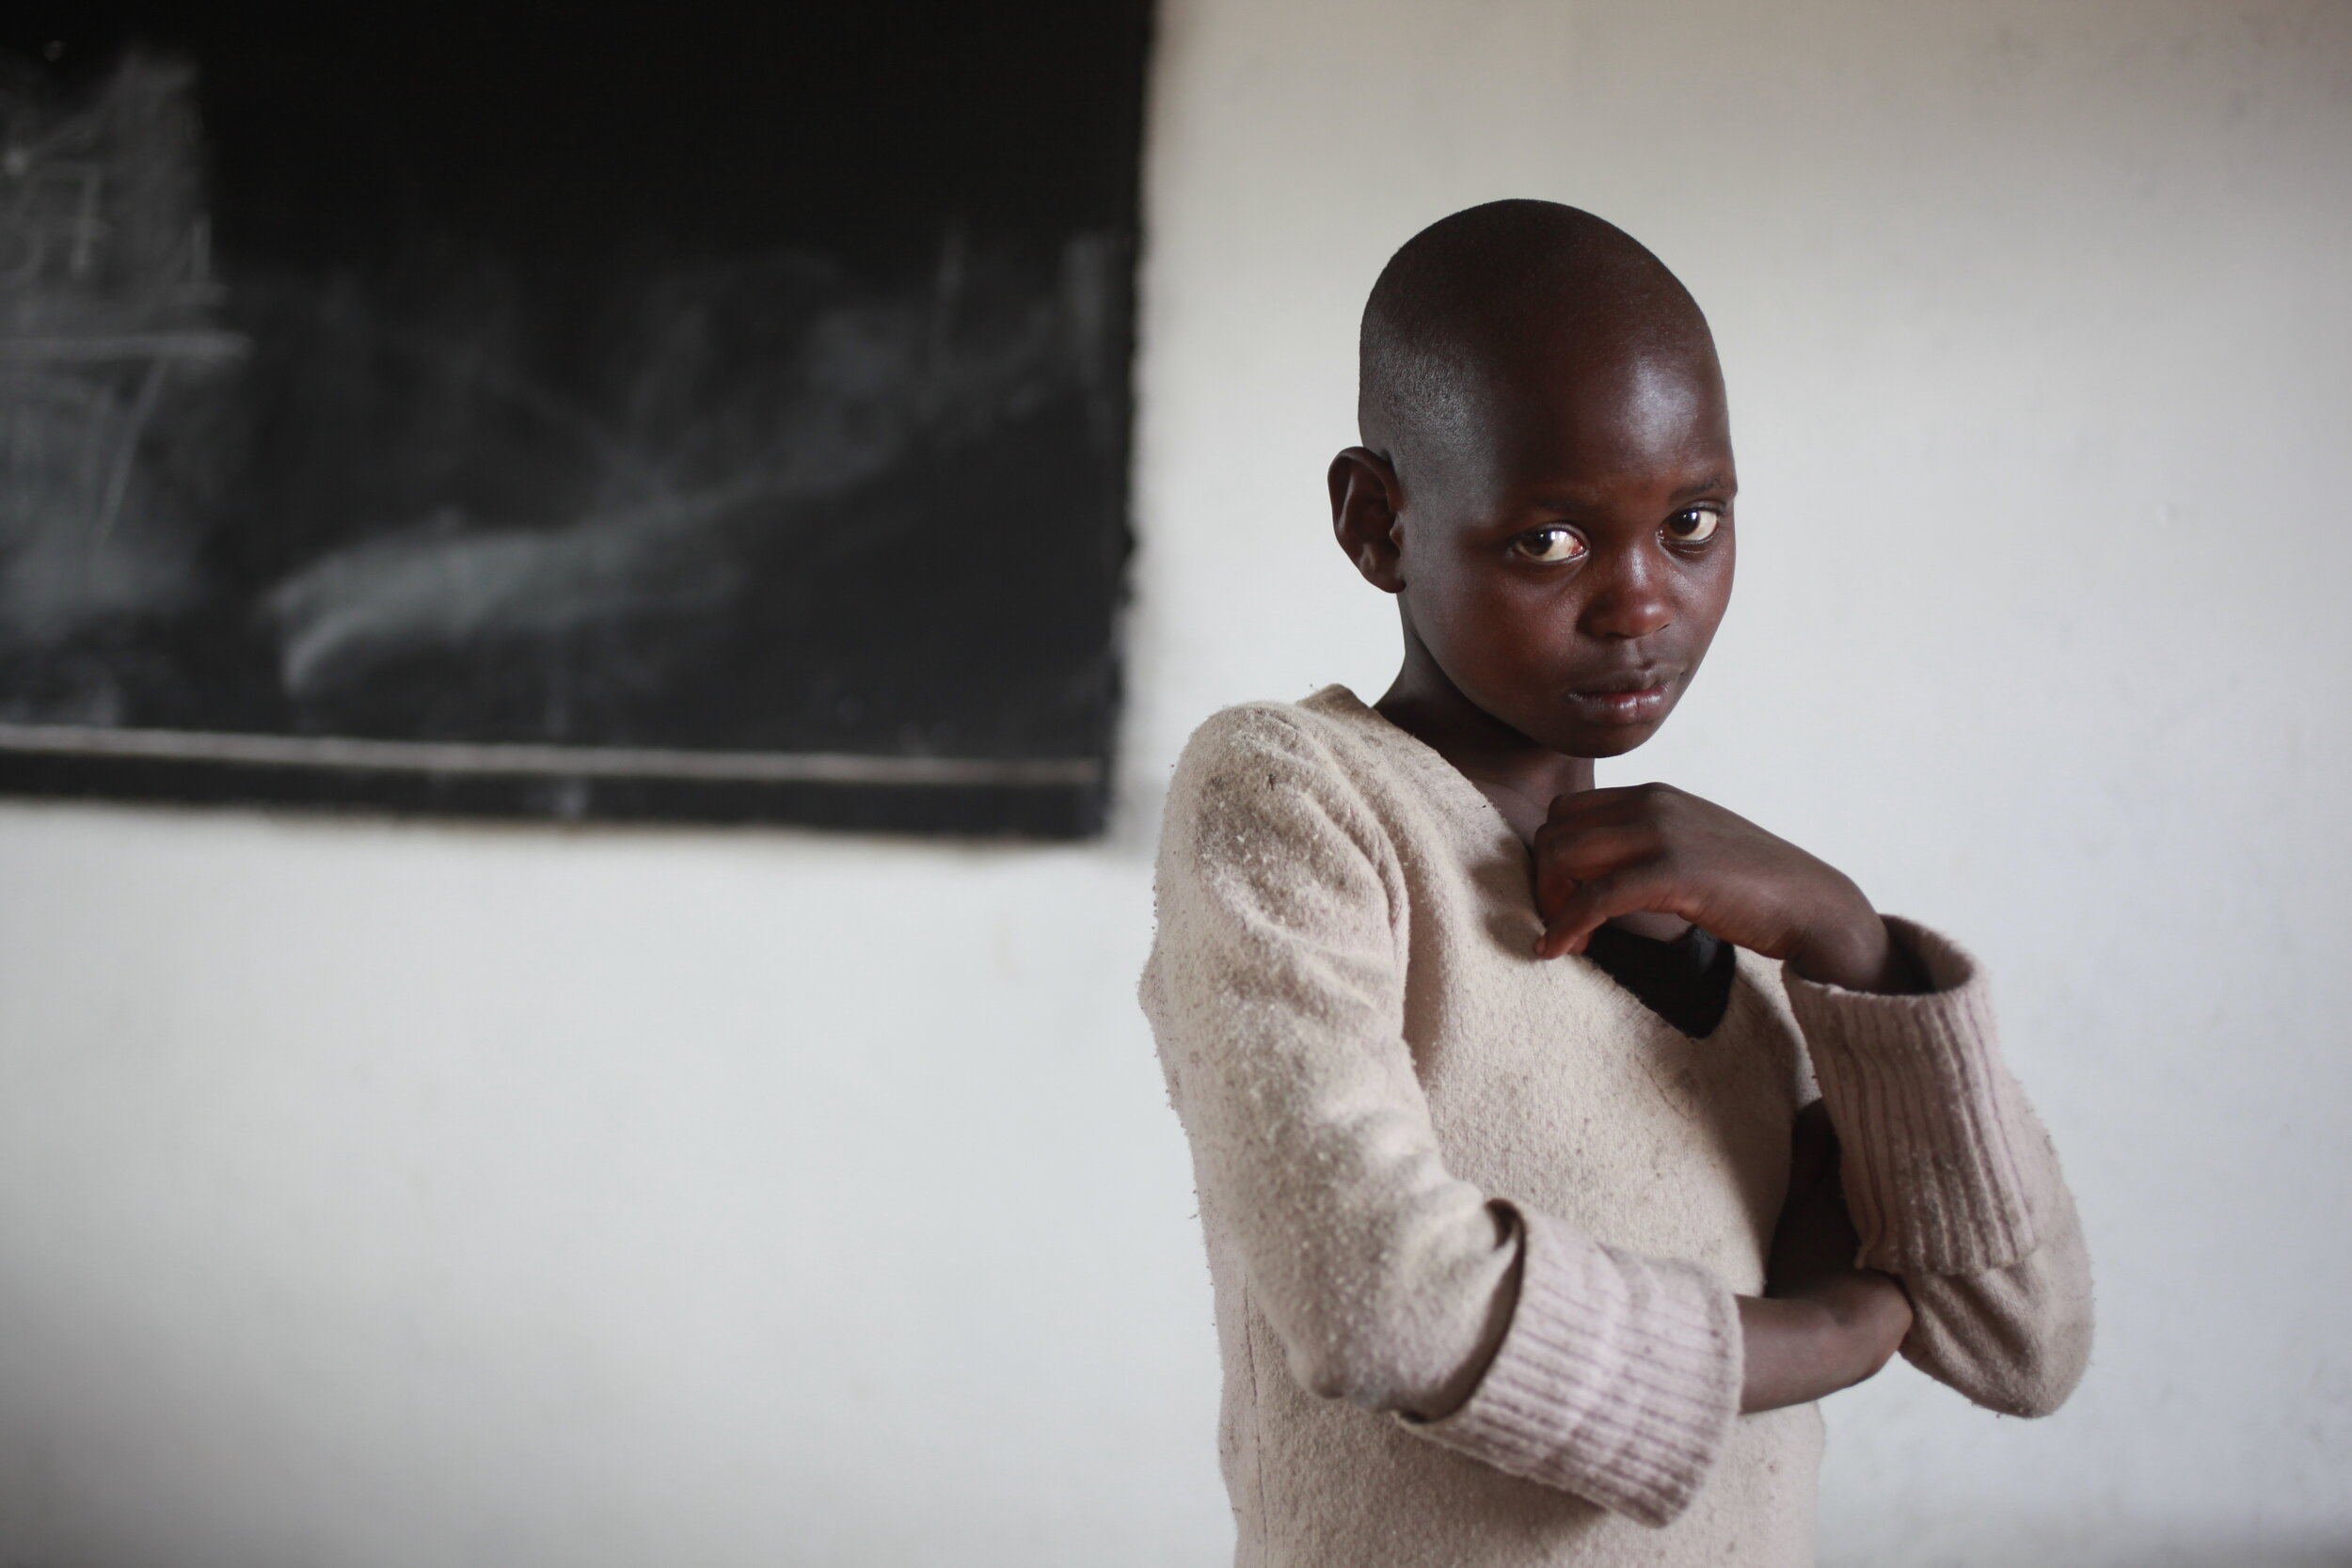  School girl in the Democratic Republic of Congo.  